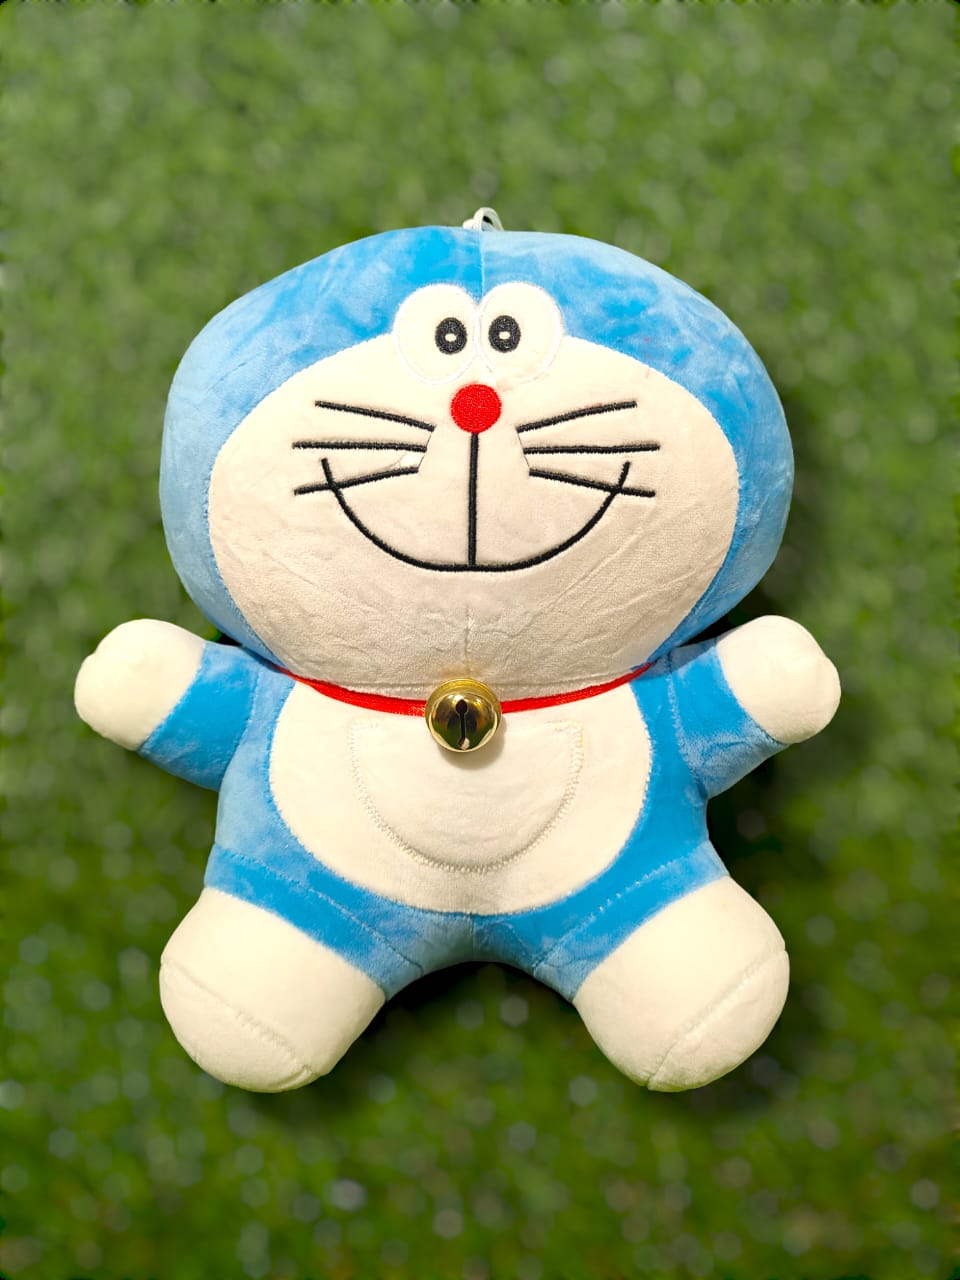 Doraemon Plush Toy!